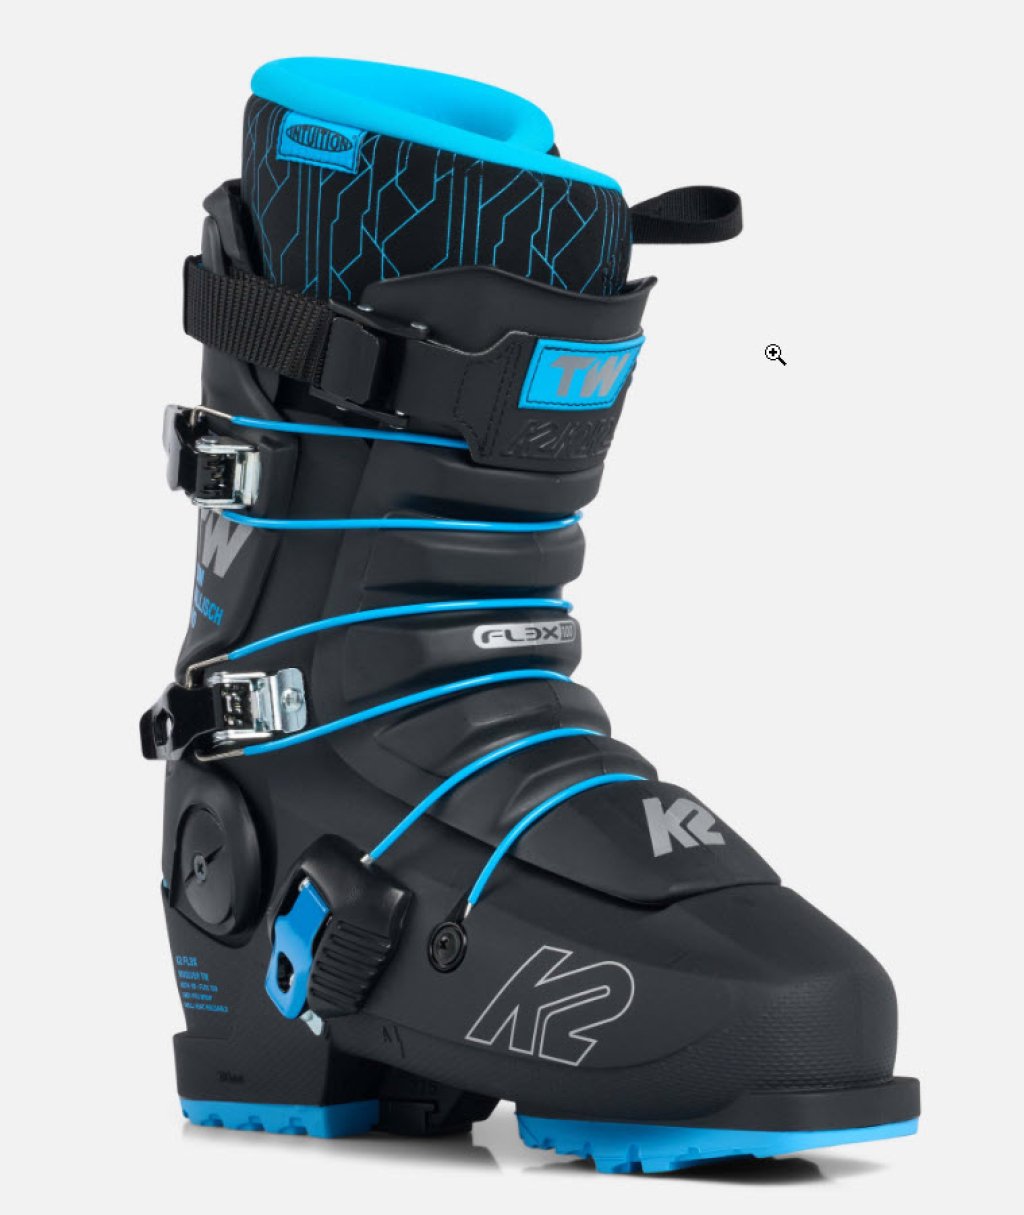 K2 REVOLVER TW MEN'S SKI BOOTS 2023
https://k2snow.com/de-de/p/k2-revolver-tw-mens-ski-boots-2023